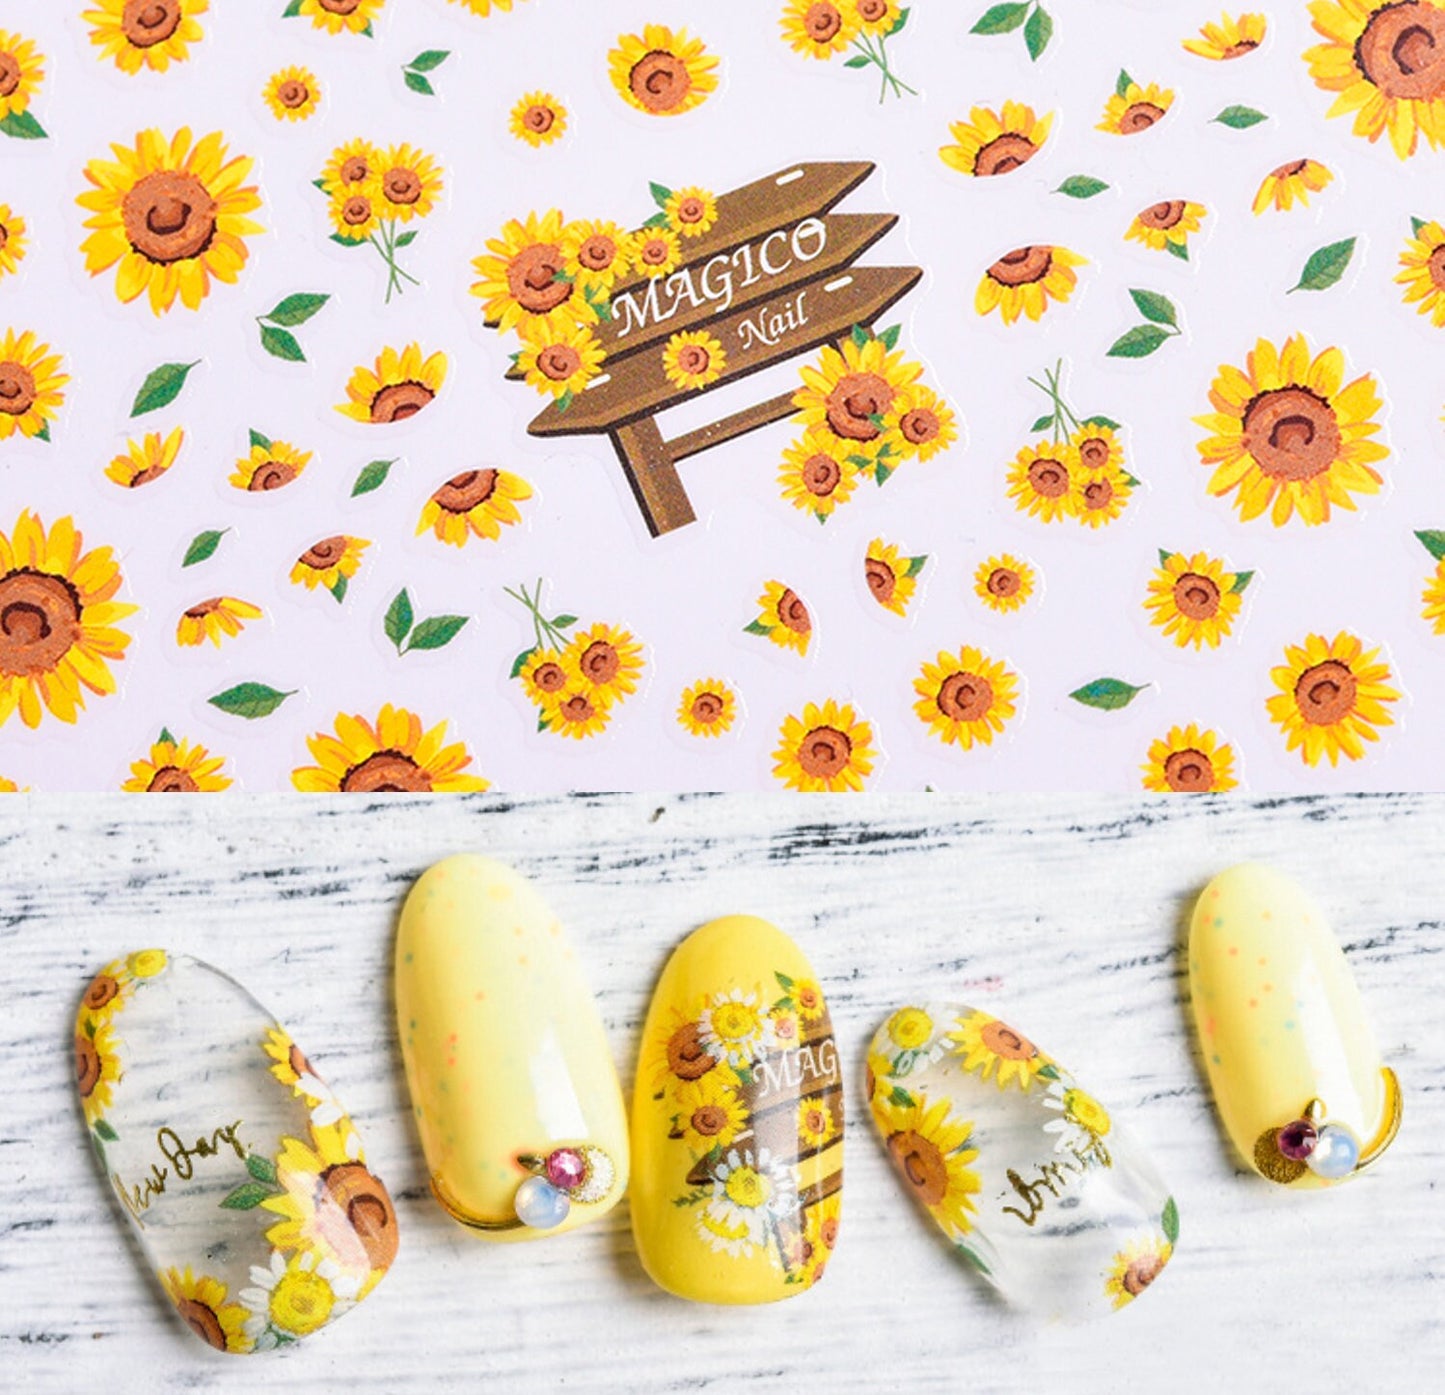 Sun flower Nail Art Sticker/ DIY Tips Guides Transfer Stickers/peel off sunflower Sticker/ yellow flower blossom manicure stencil